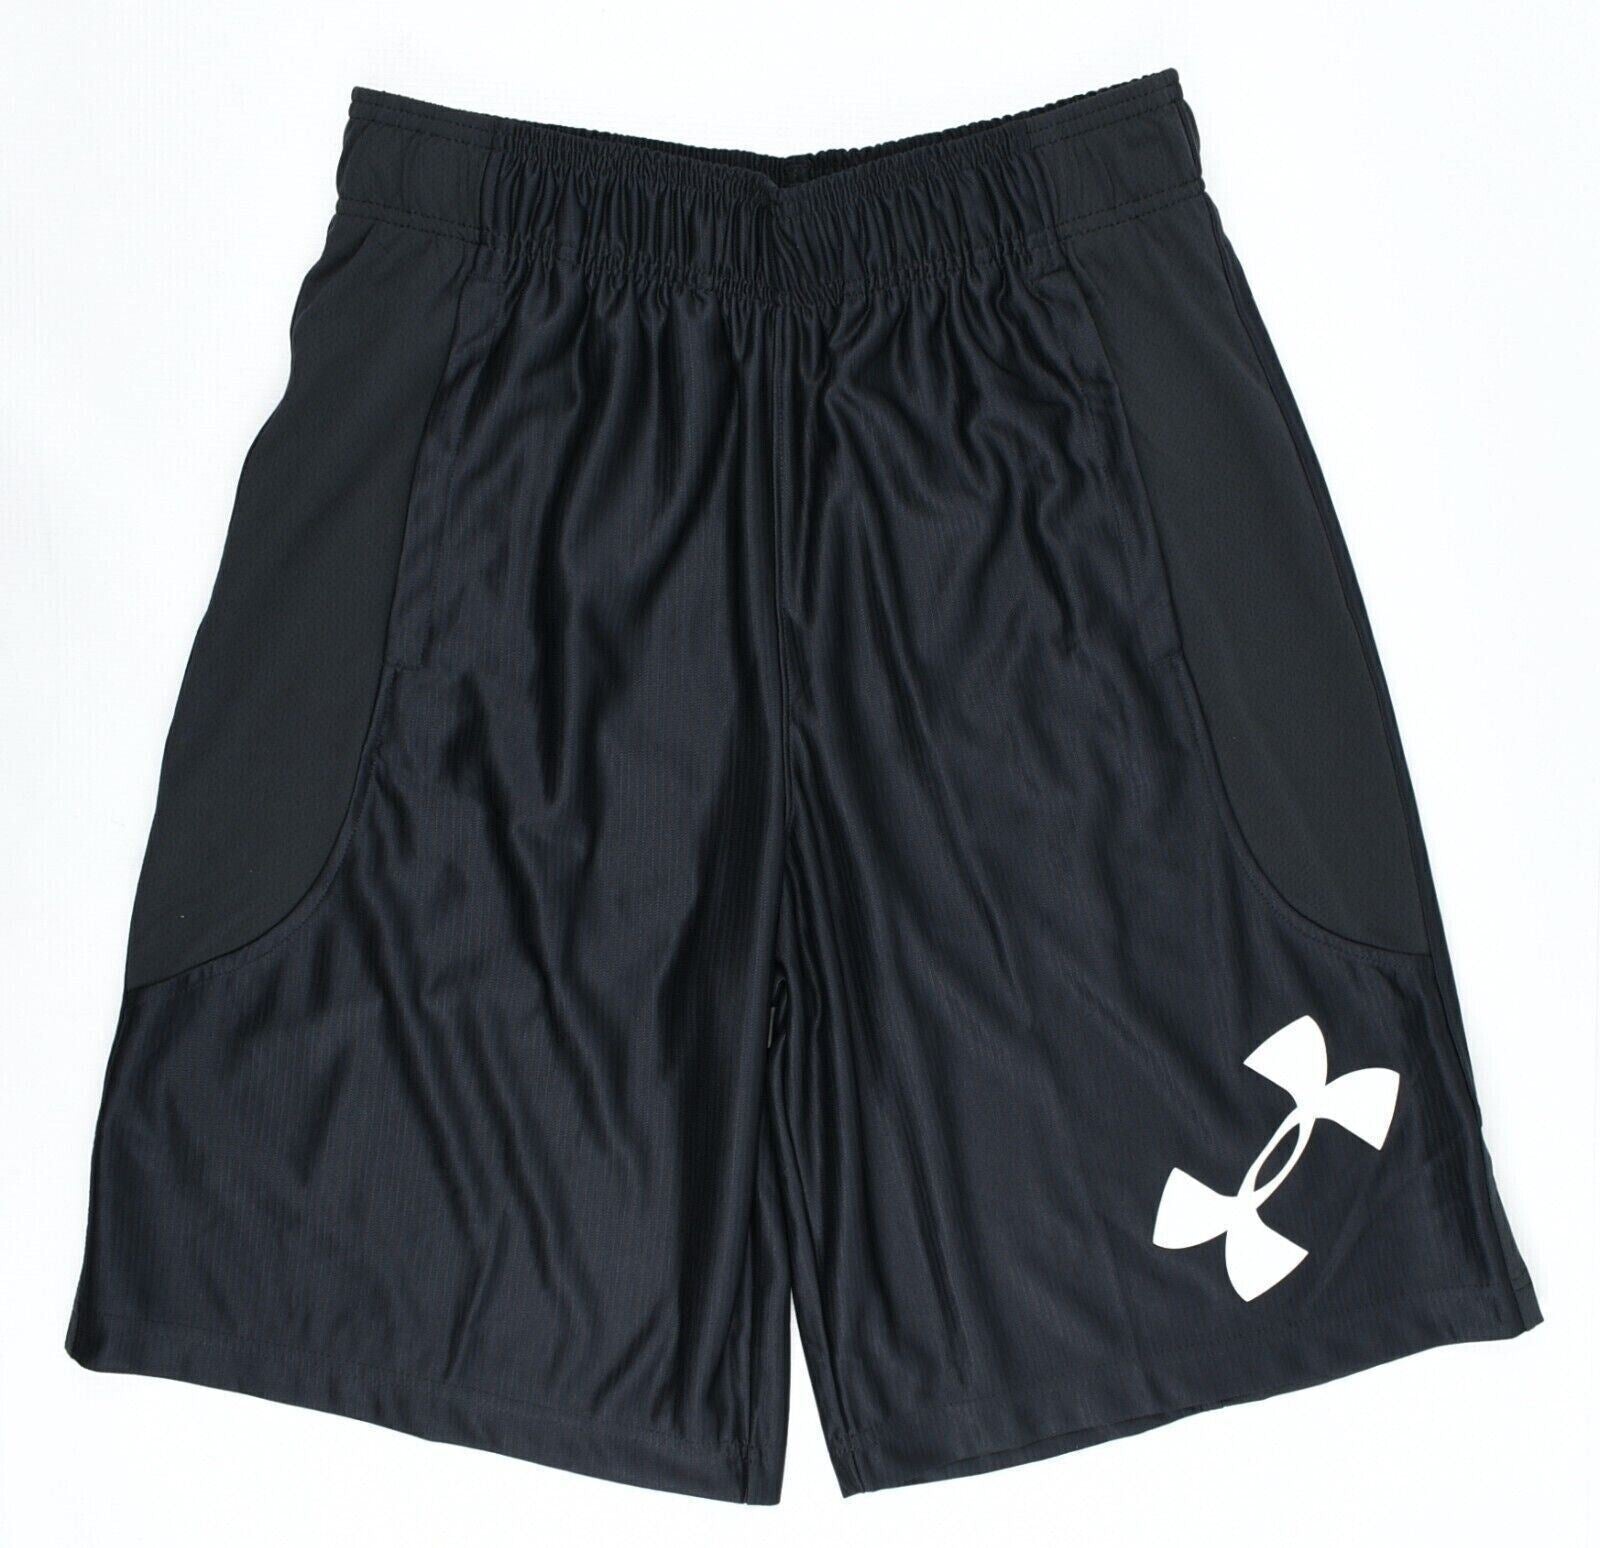 UNDER ARMOUR Men's Perimeter Shorts, Loose Fit, Black/White Logo, size S